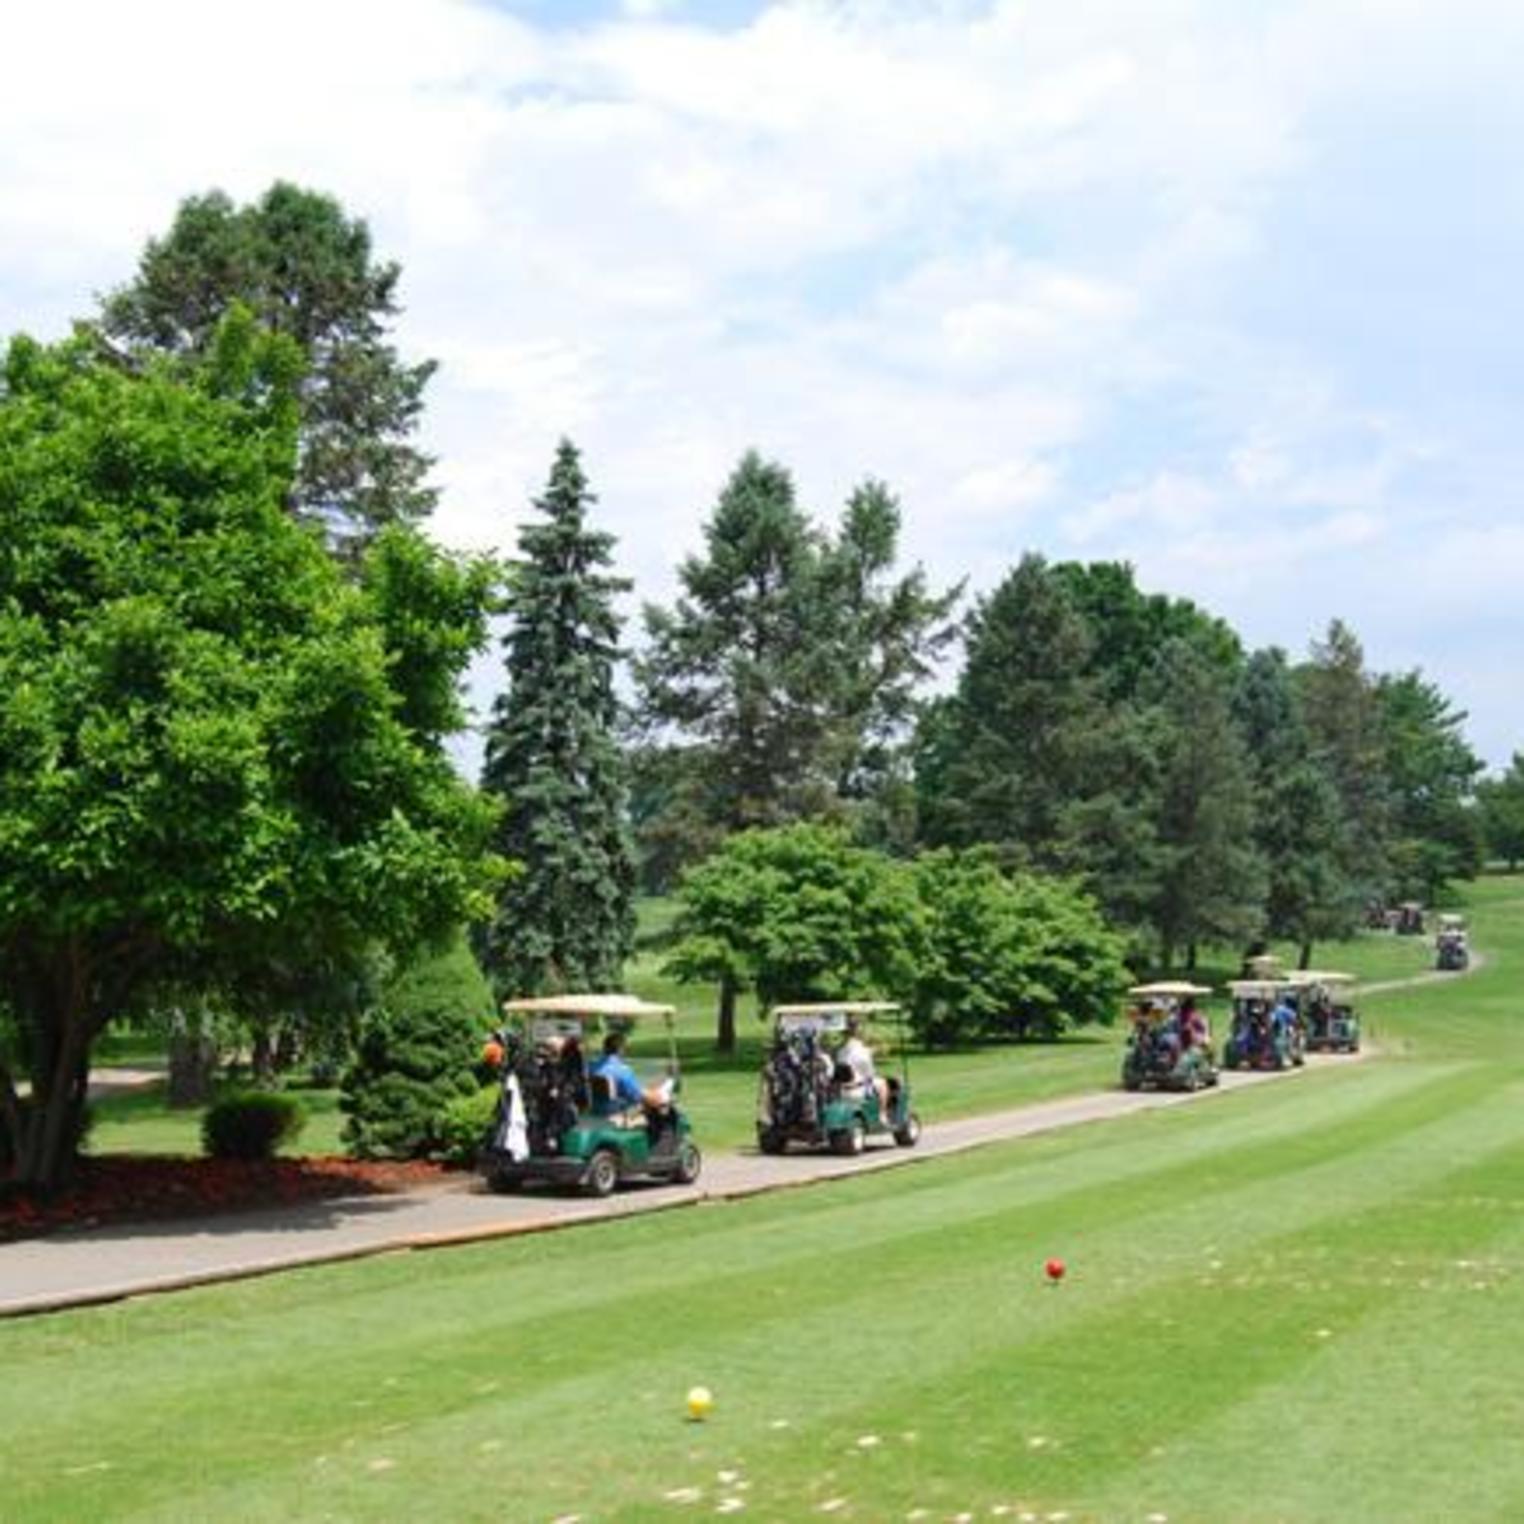 Driving the golf carts at Armitage Golf Club